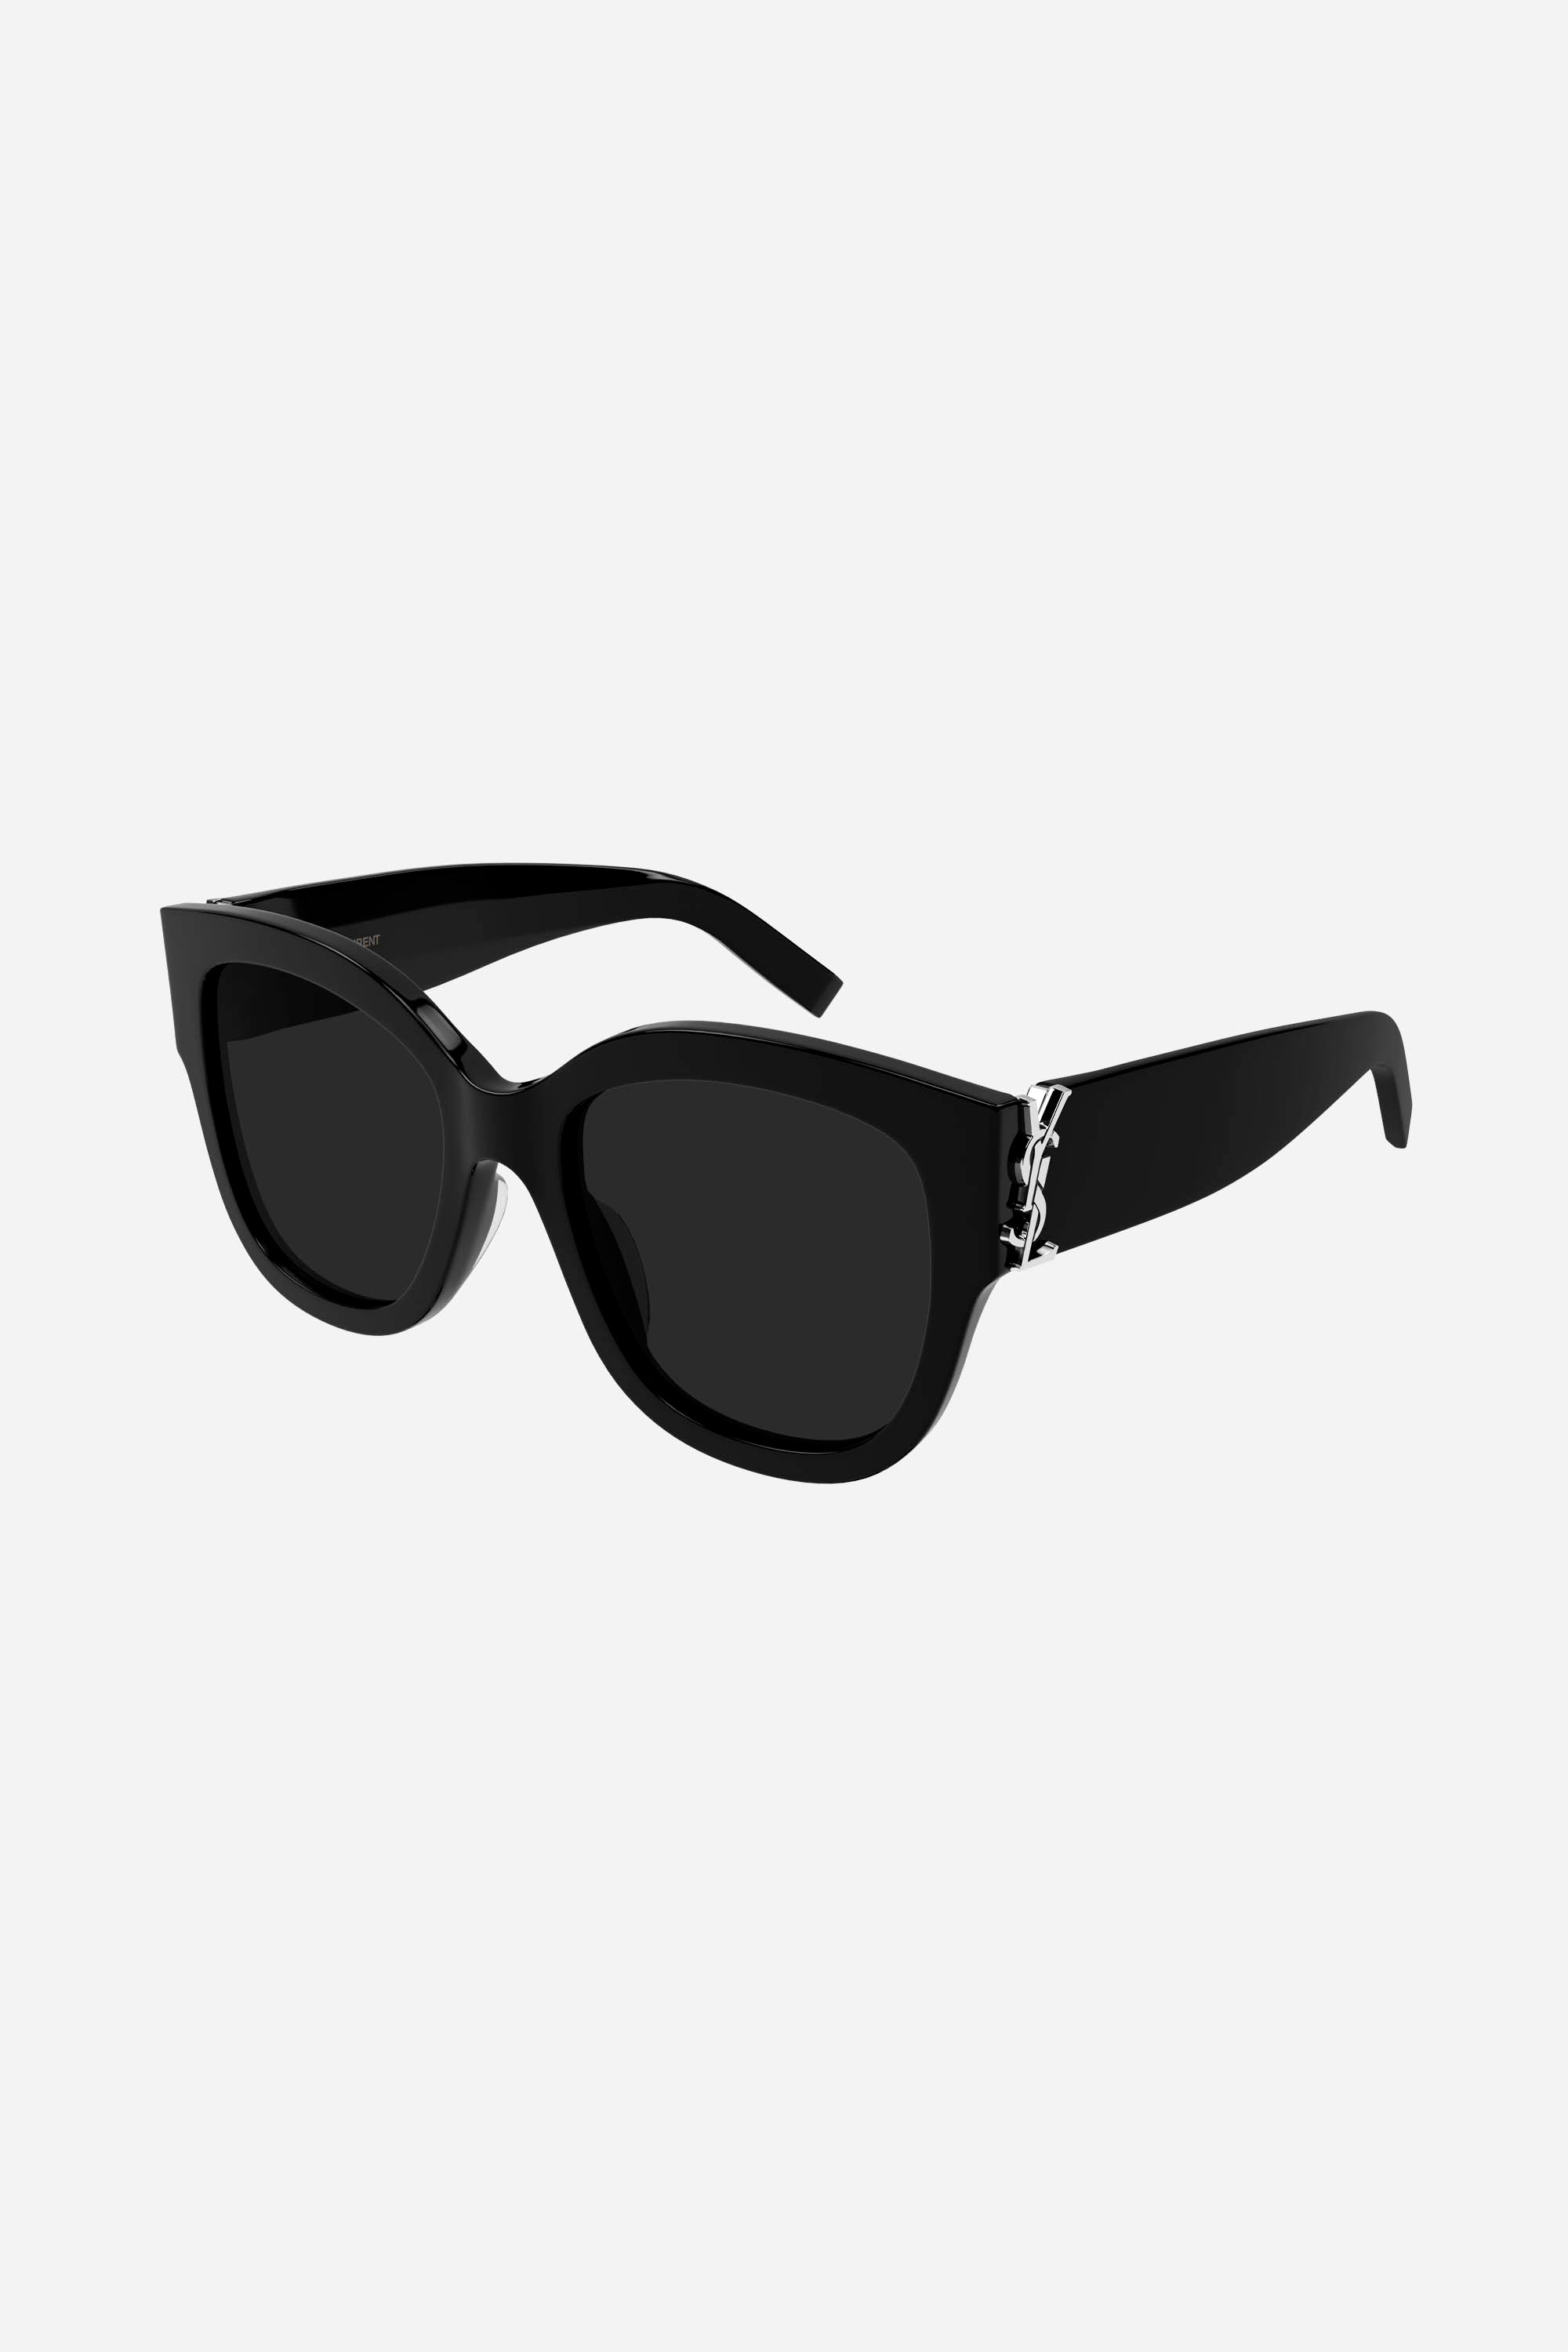 Saint Laurent SL M95 oversized black and silver cat eye sunglasses - Eyewear Club